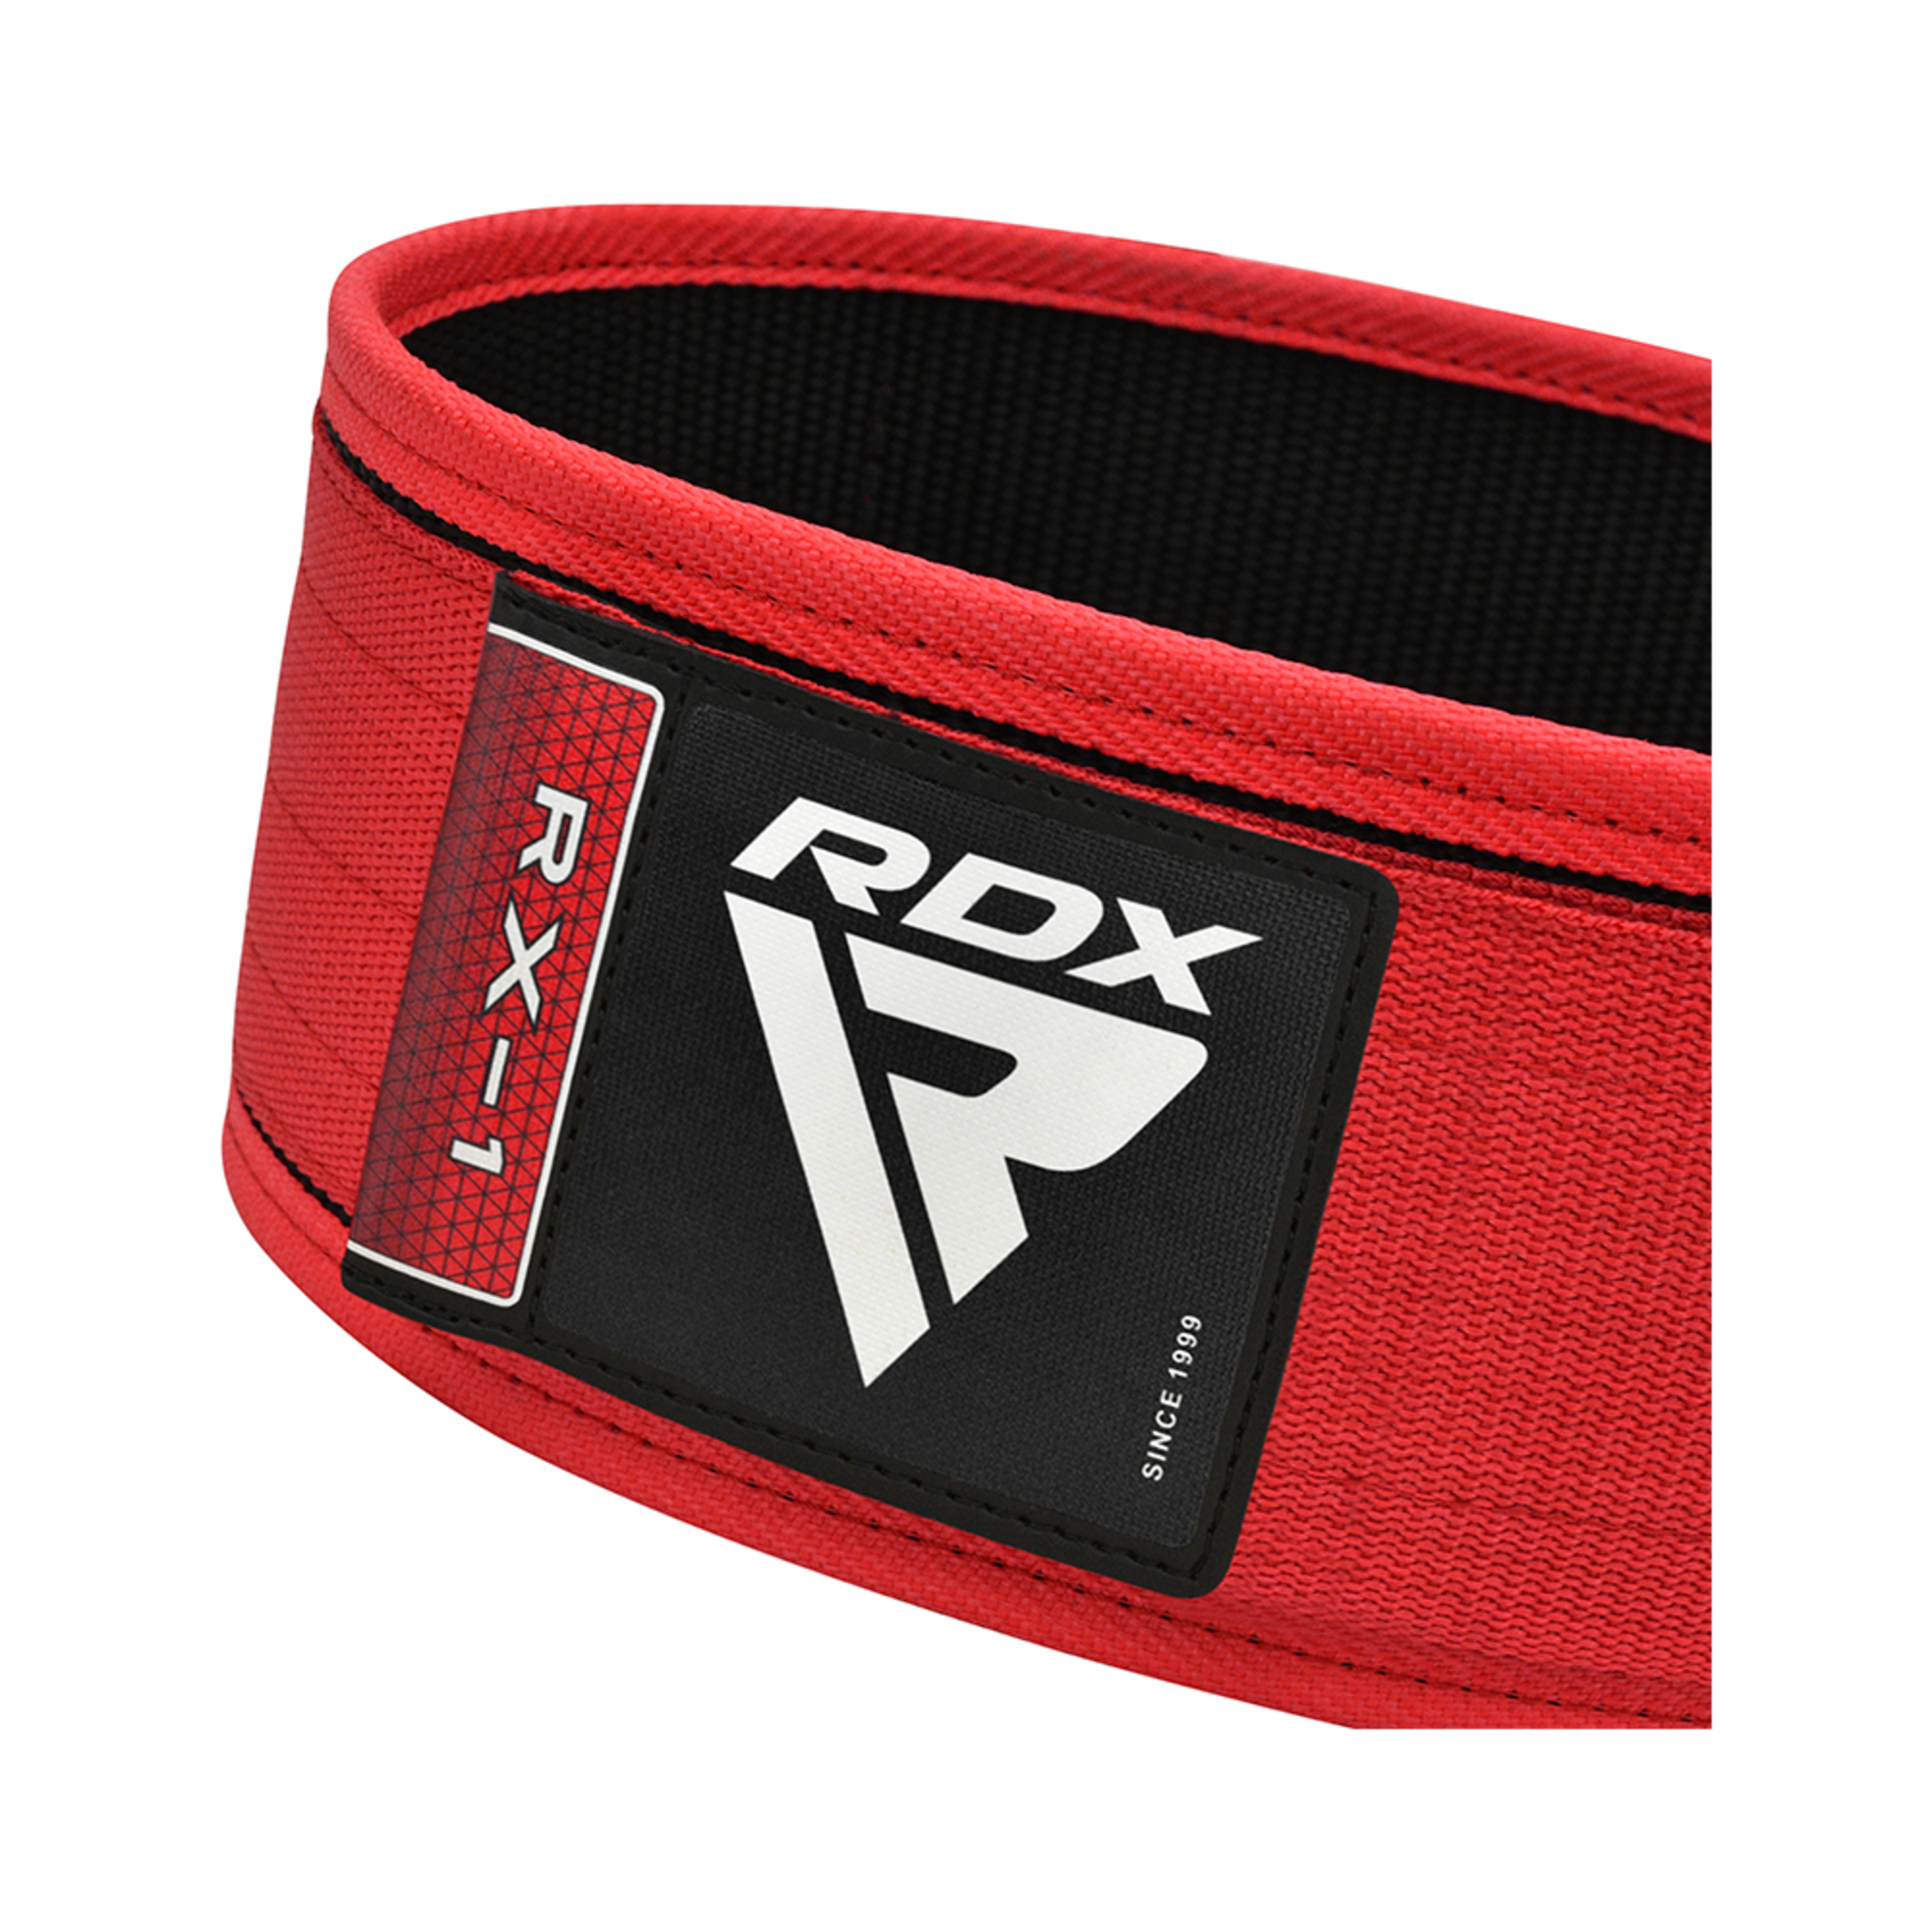 Cinturón De Fitness Rdx Wbs-rx1 - Rojo - Weightlifting Powerlifting Fitness  MKP